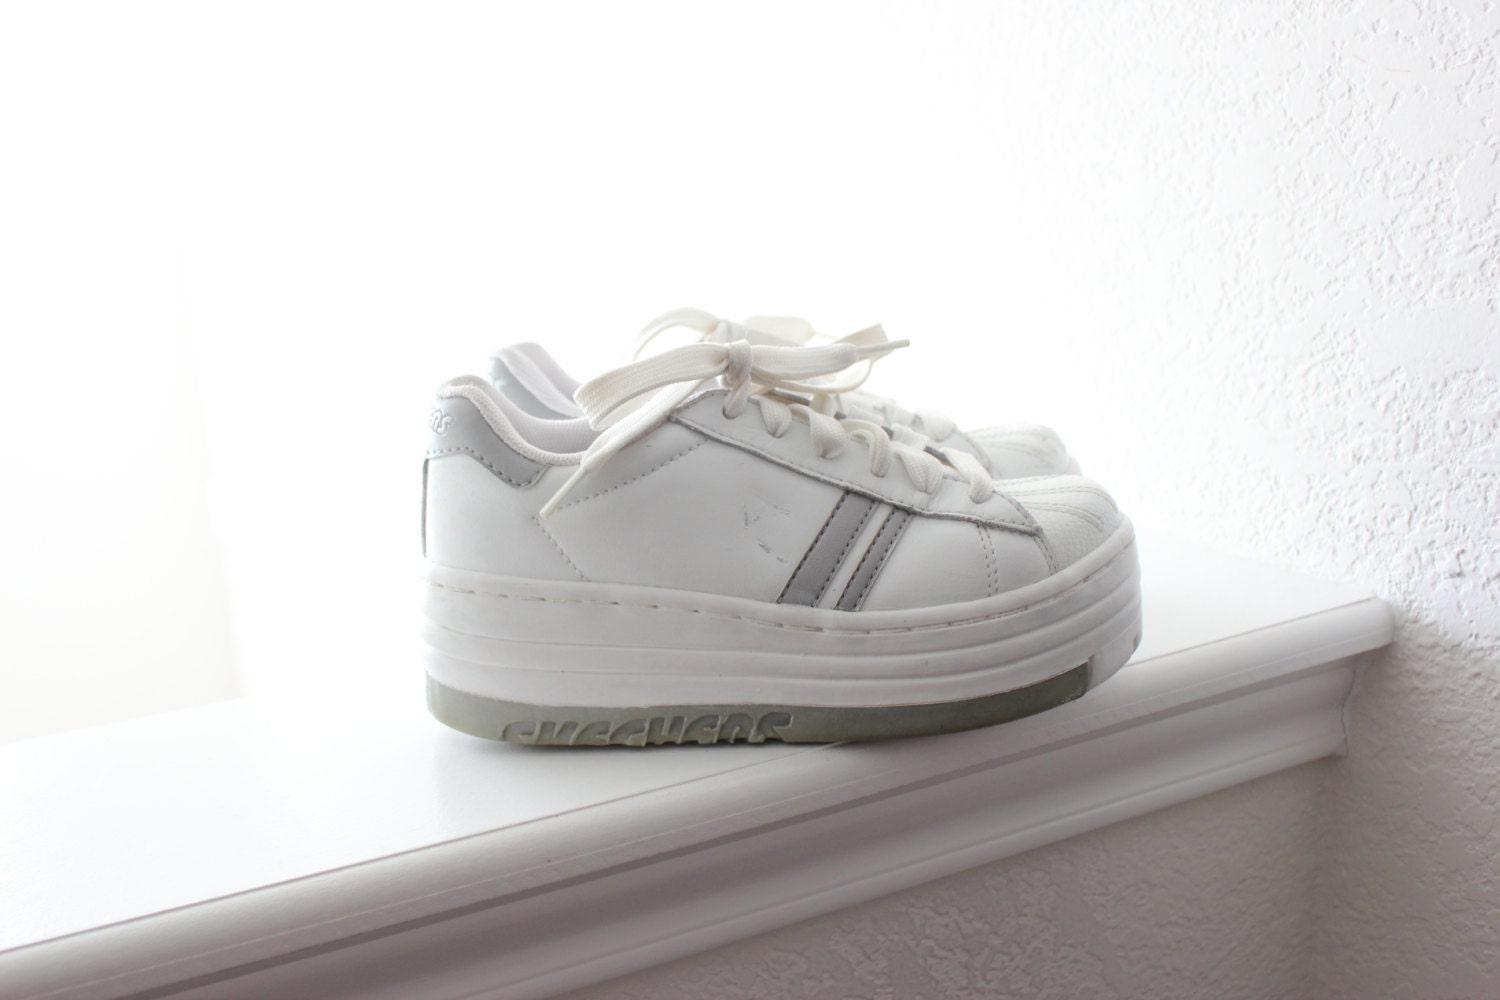 90's white platform skechers tennis shoes 6.5